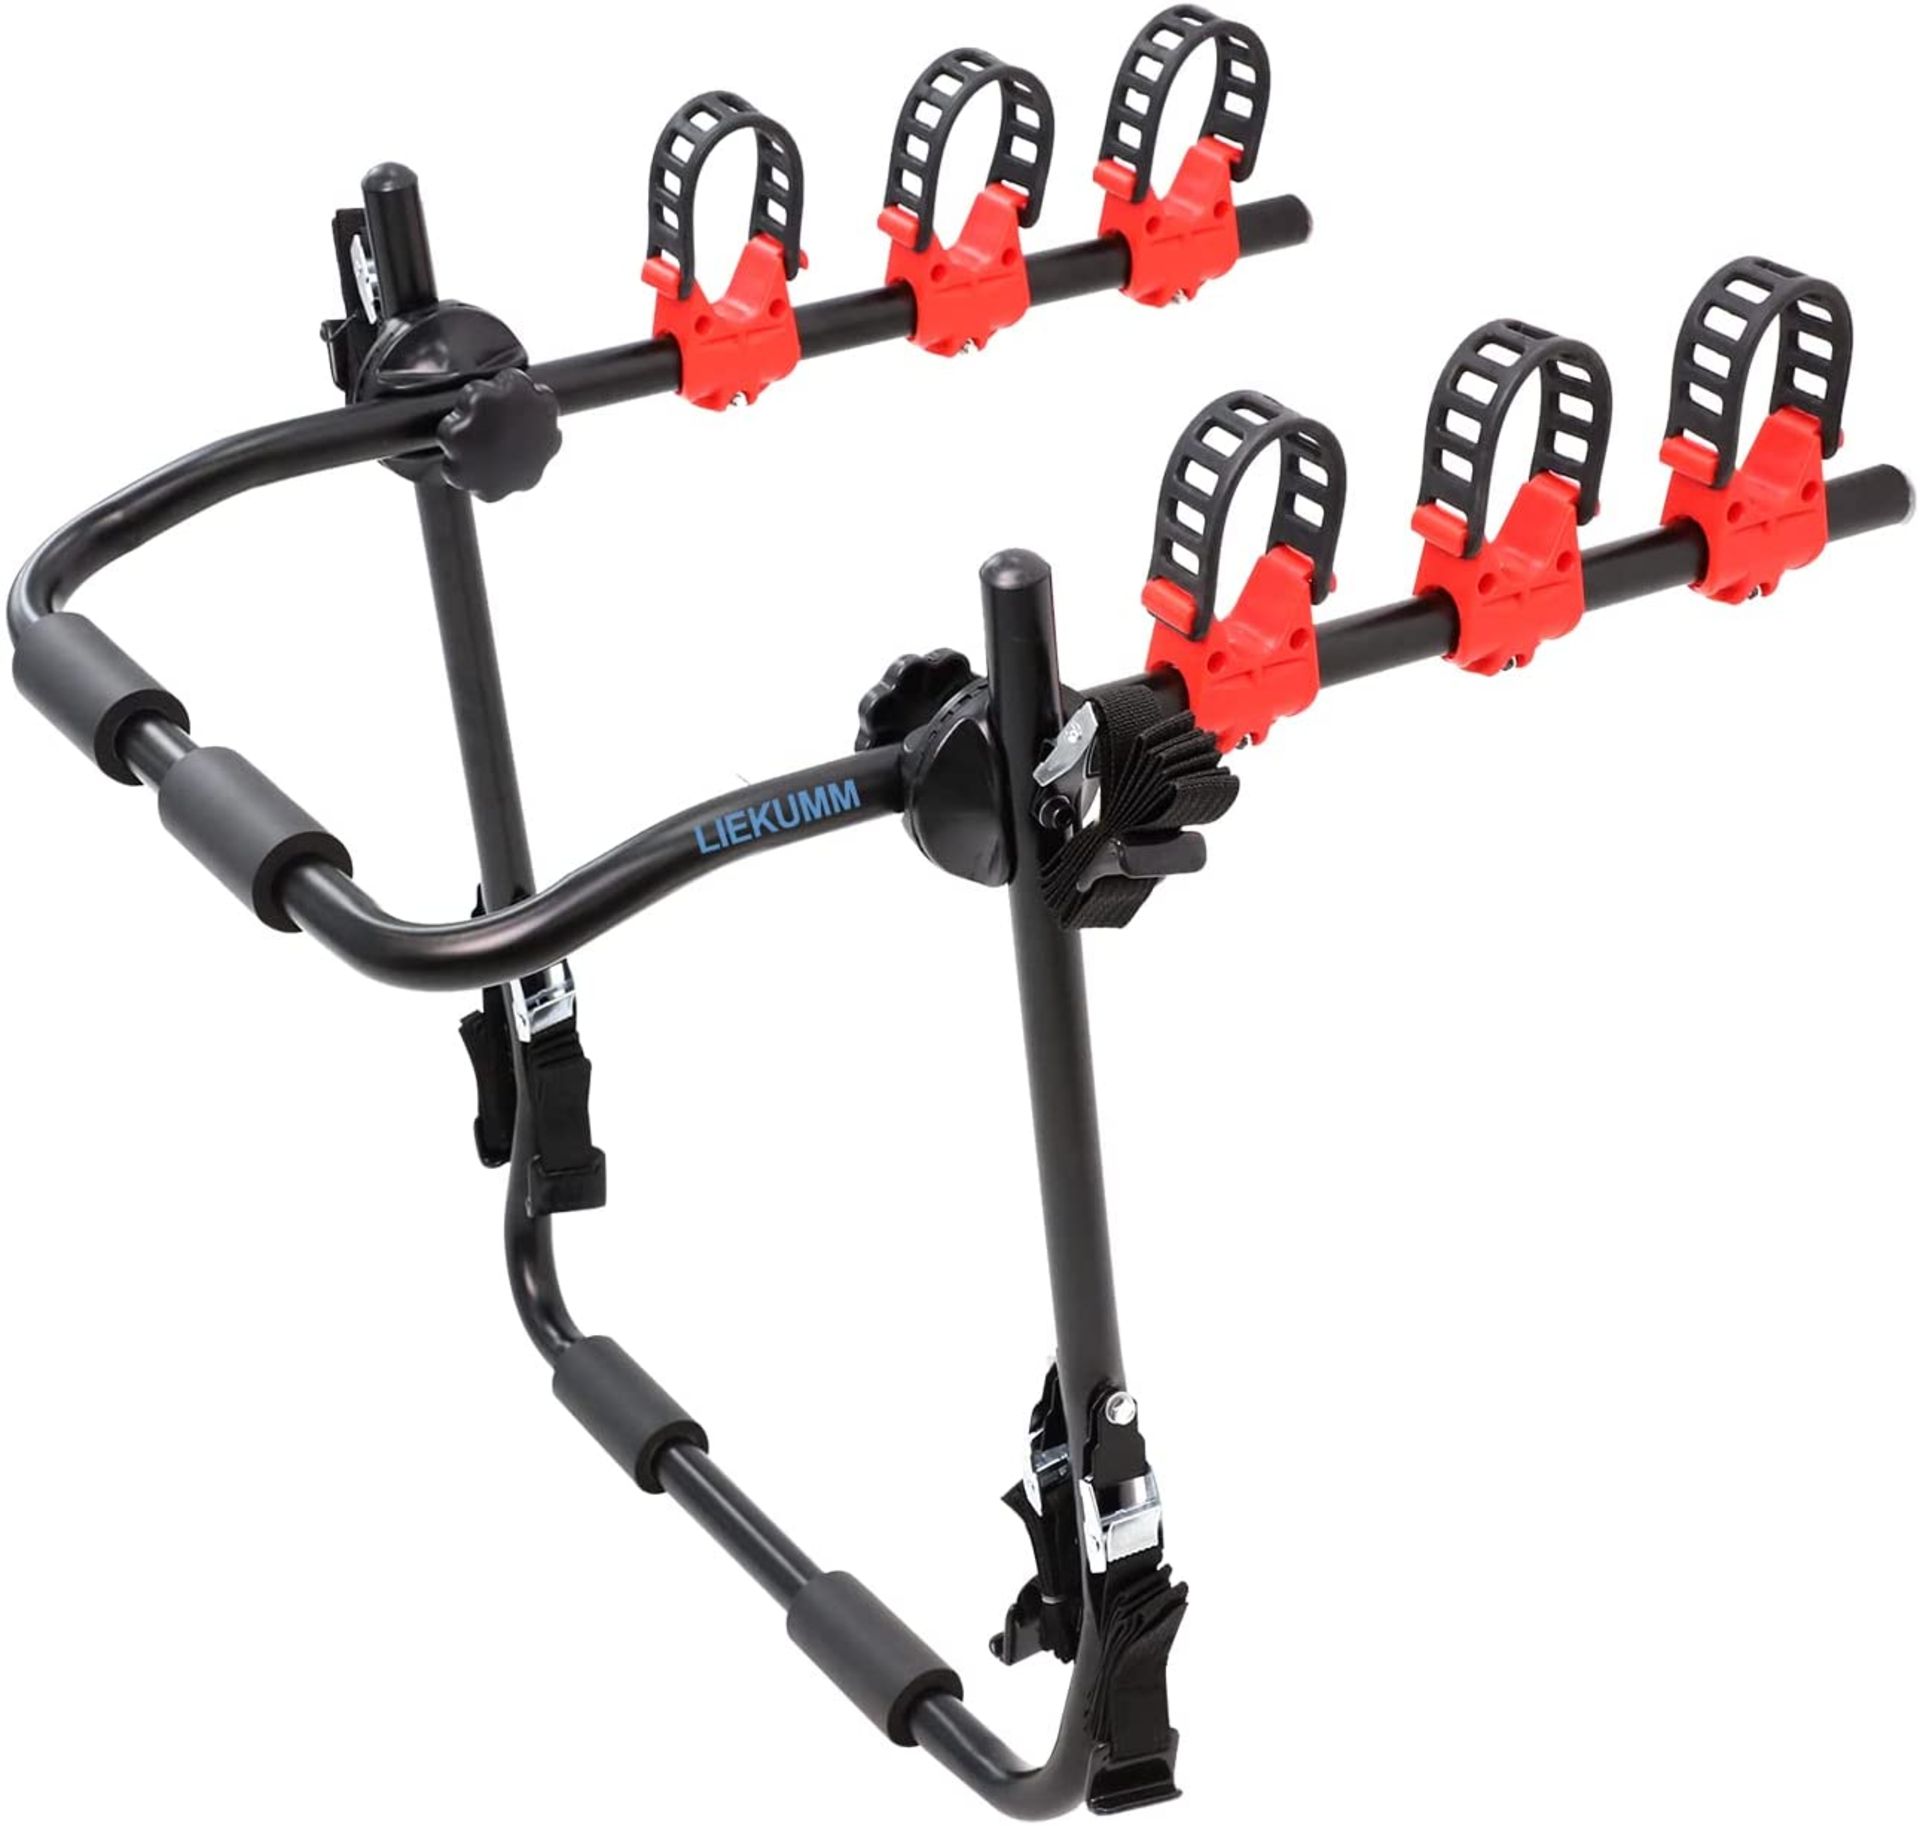 LIEKUMM 3-Bike Trunk Mount Rack Car Bike Rack, Foldable Vehicle-Mounted Bicycle Hitch Rack